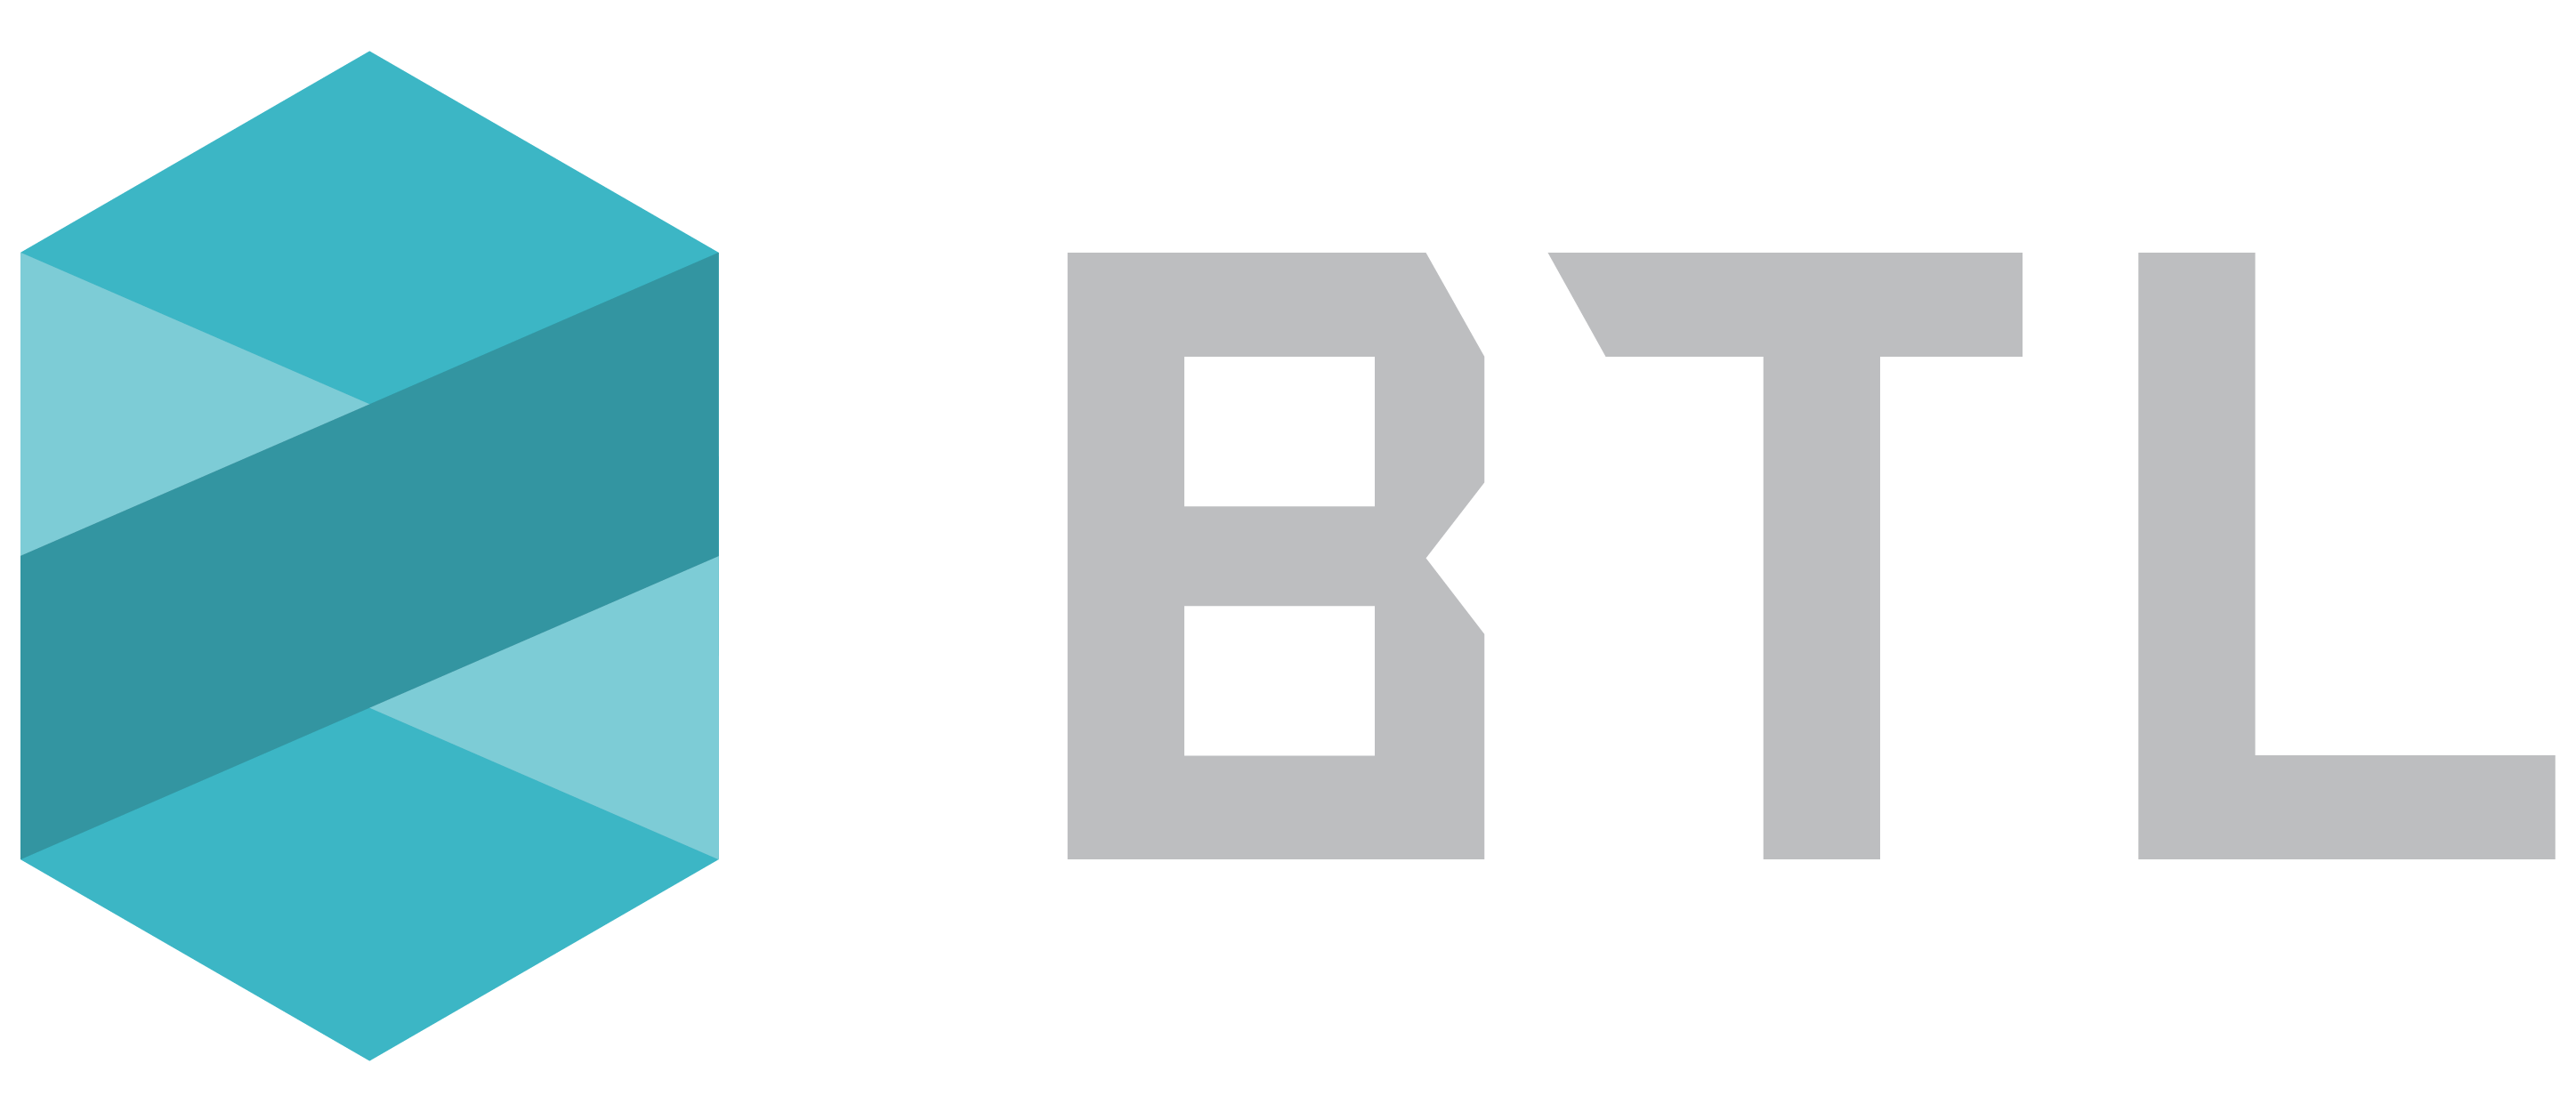 BTL Logo - AltFi Group LTD